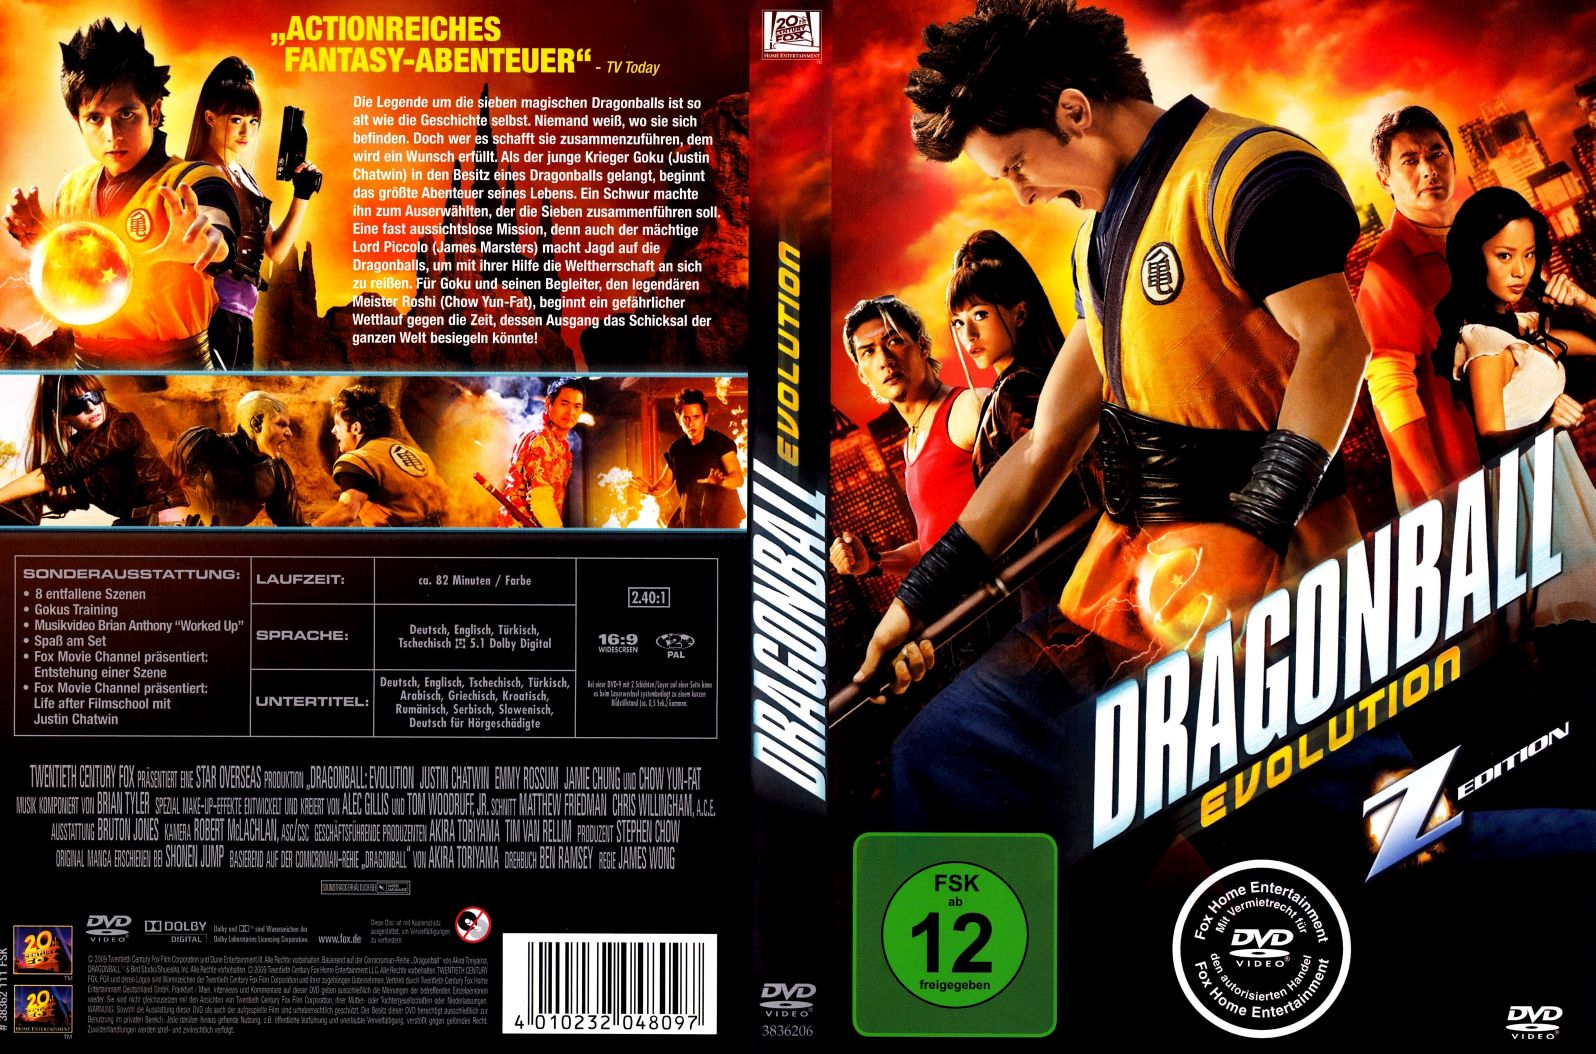 dragonball evolution version 1 | DVD Covers | Cover ...